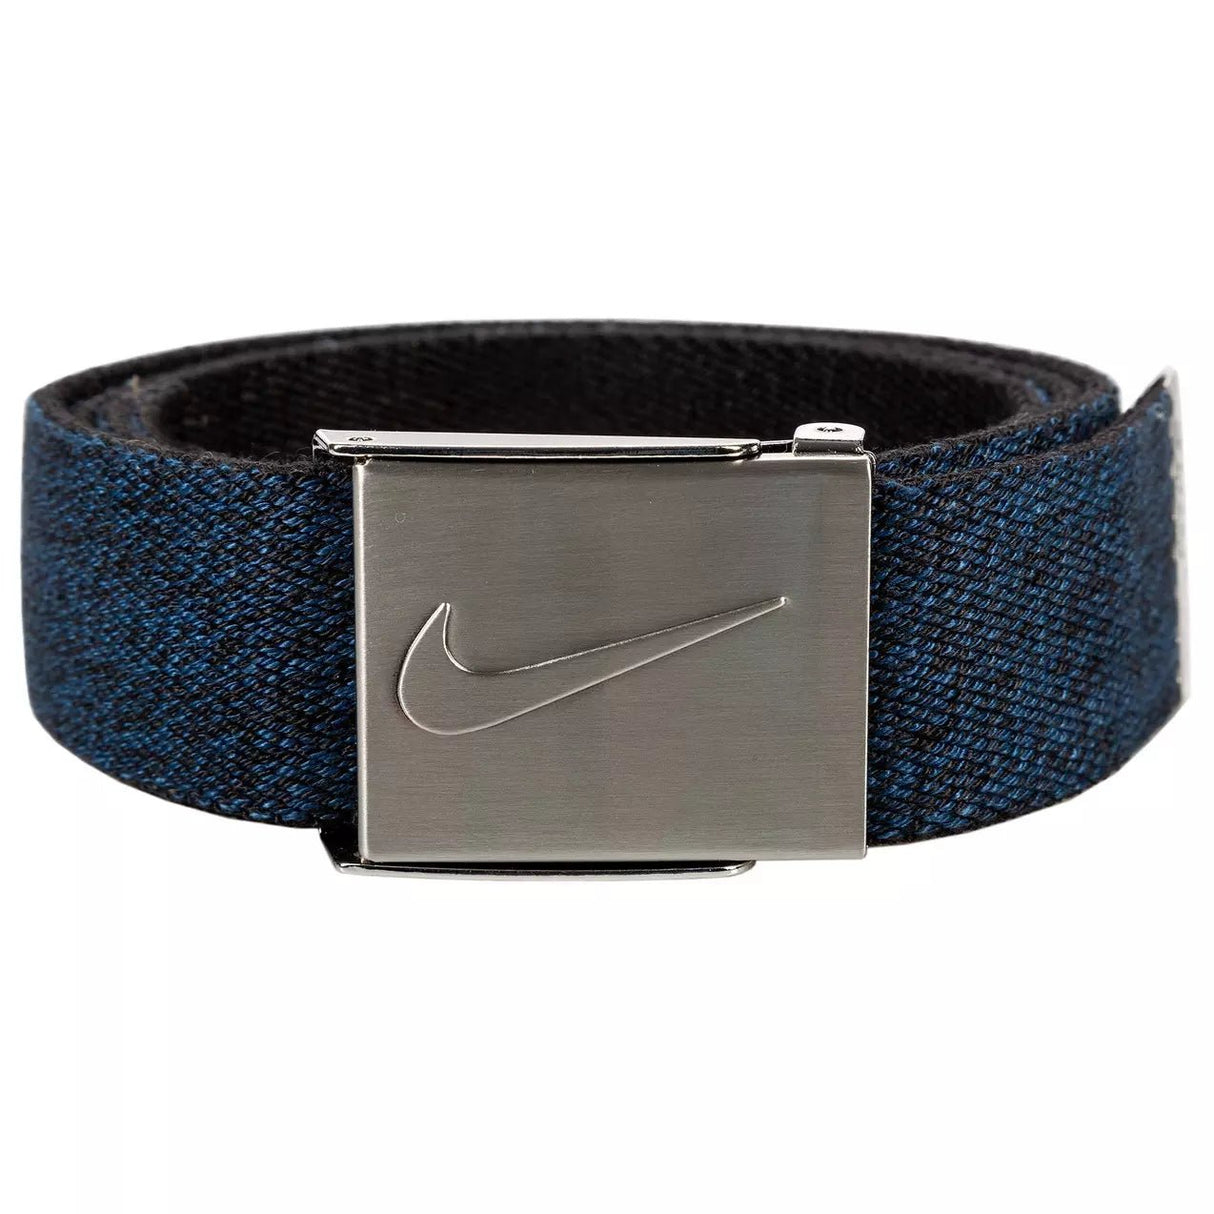 Nike Reversible Stretch Web Belt